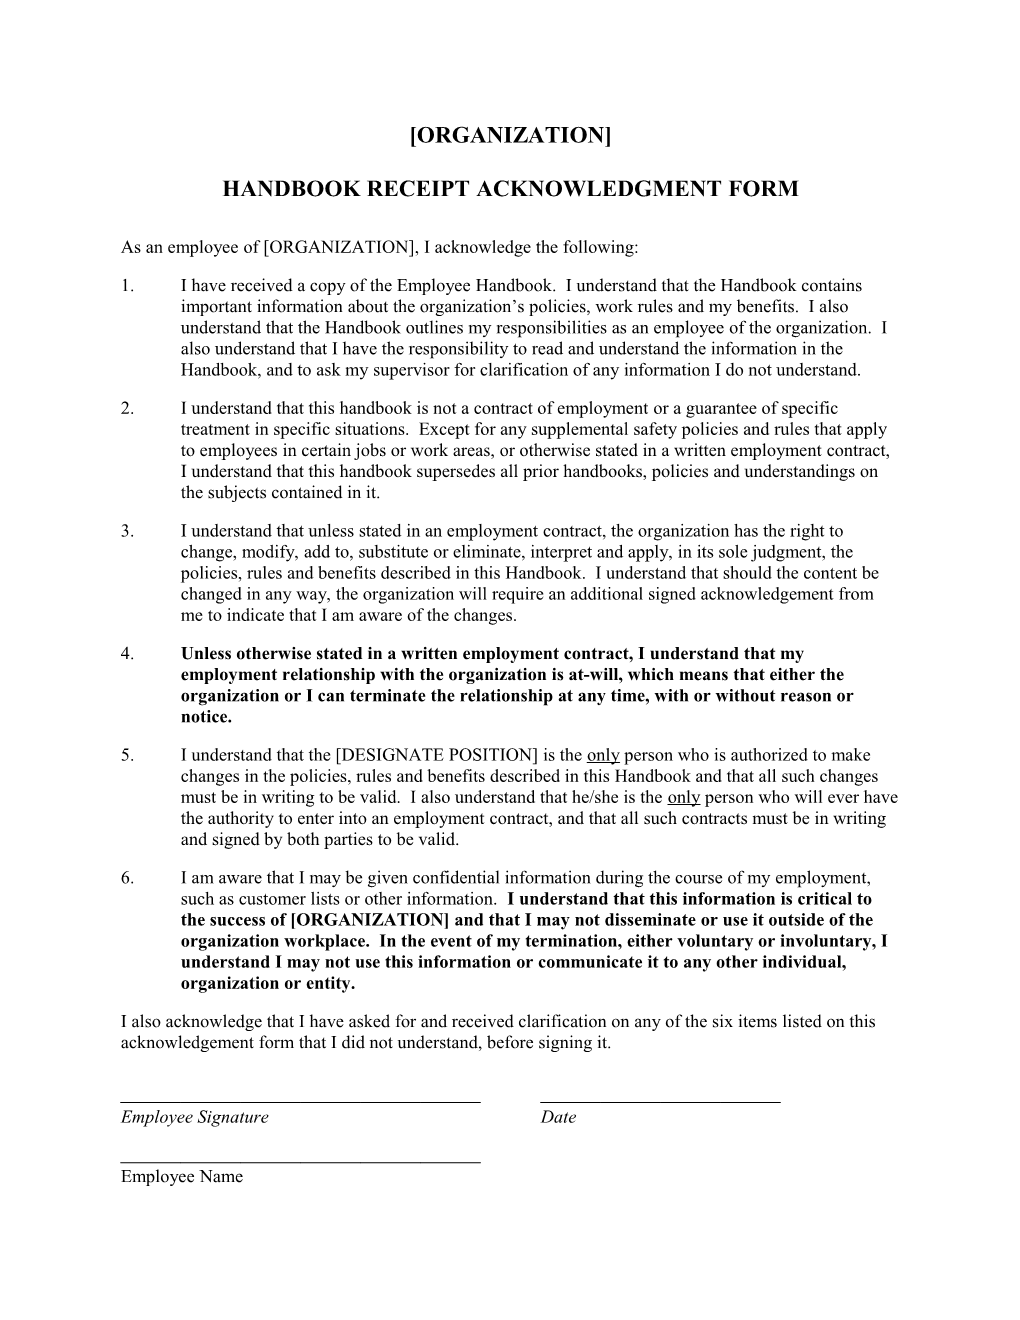 Handbook Receipt Acknowledgment Form